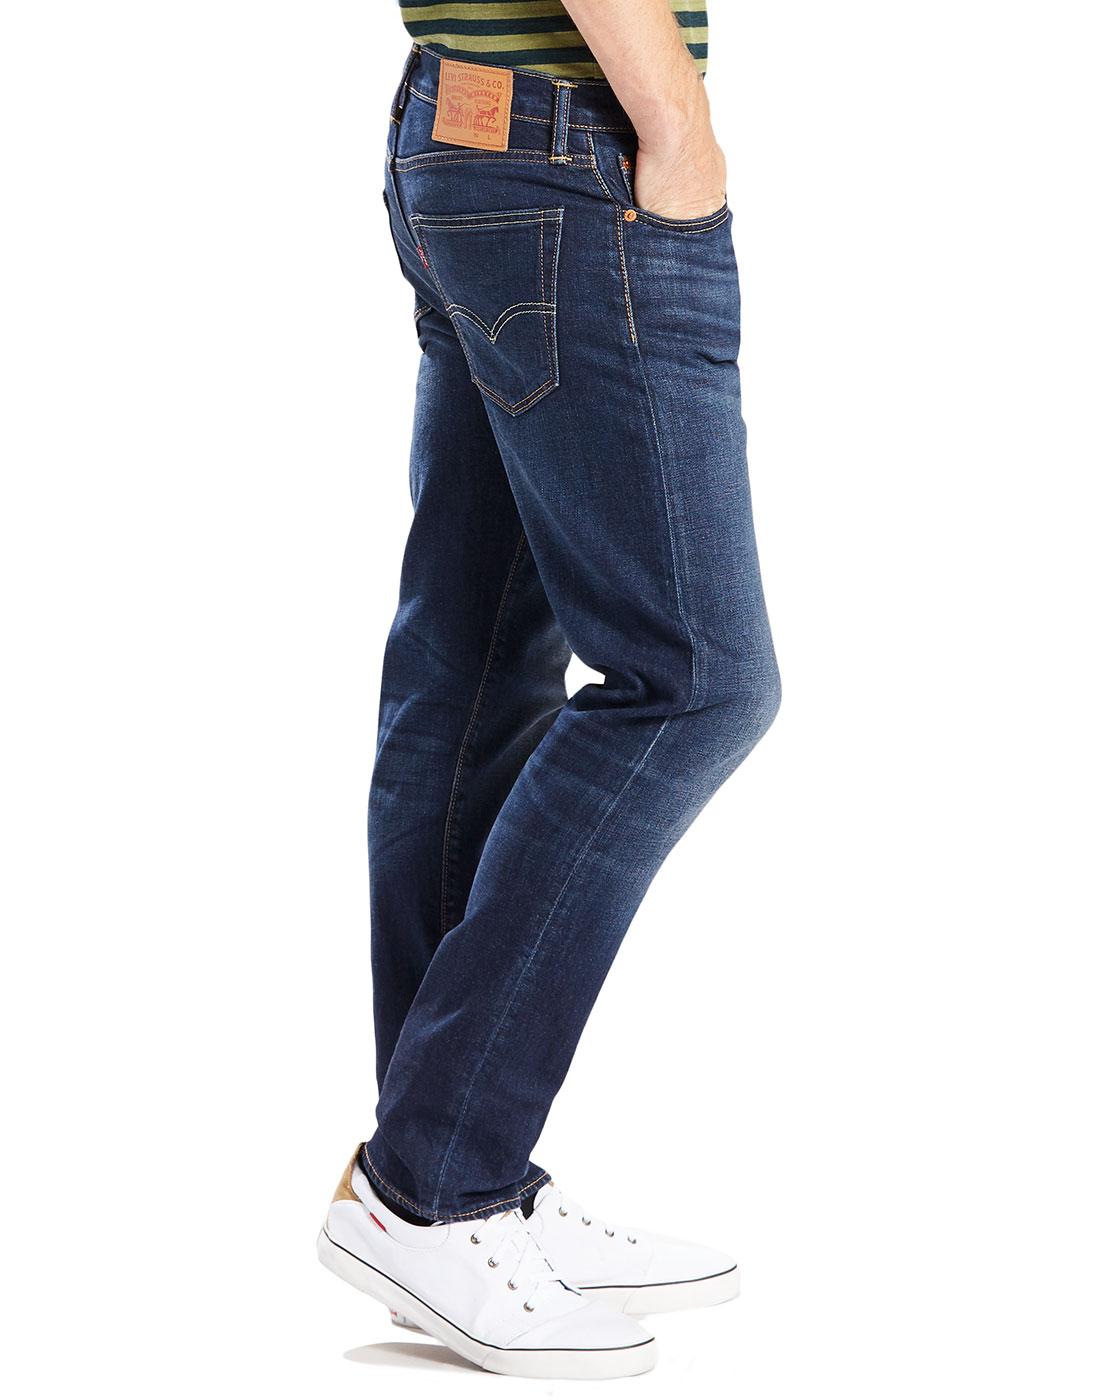 LEVI'S 502 Men's Retro Mod Regular Tapered Jeans in City Park